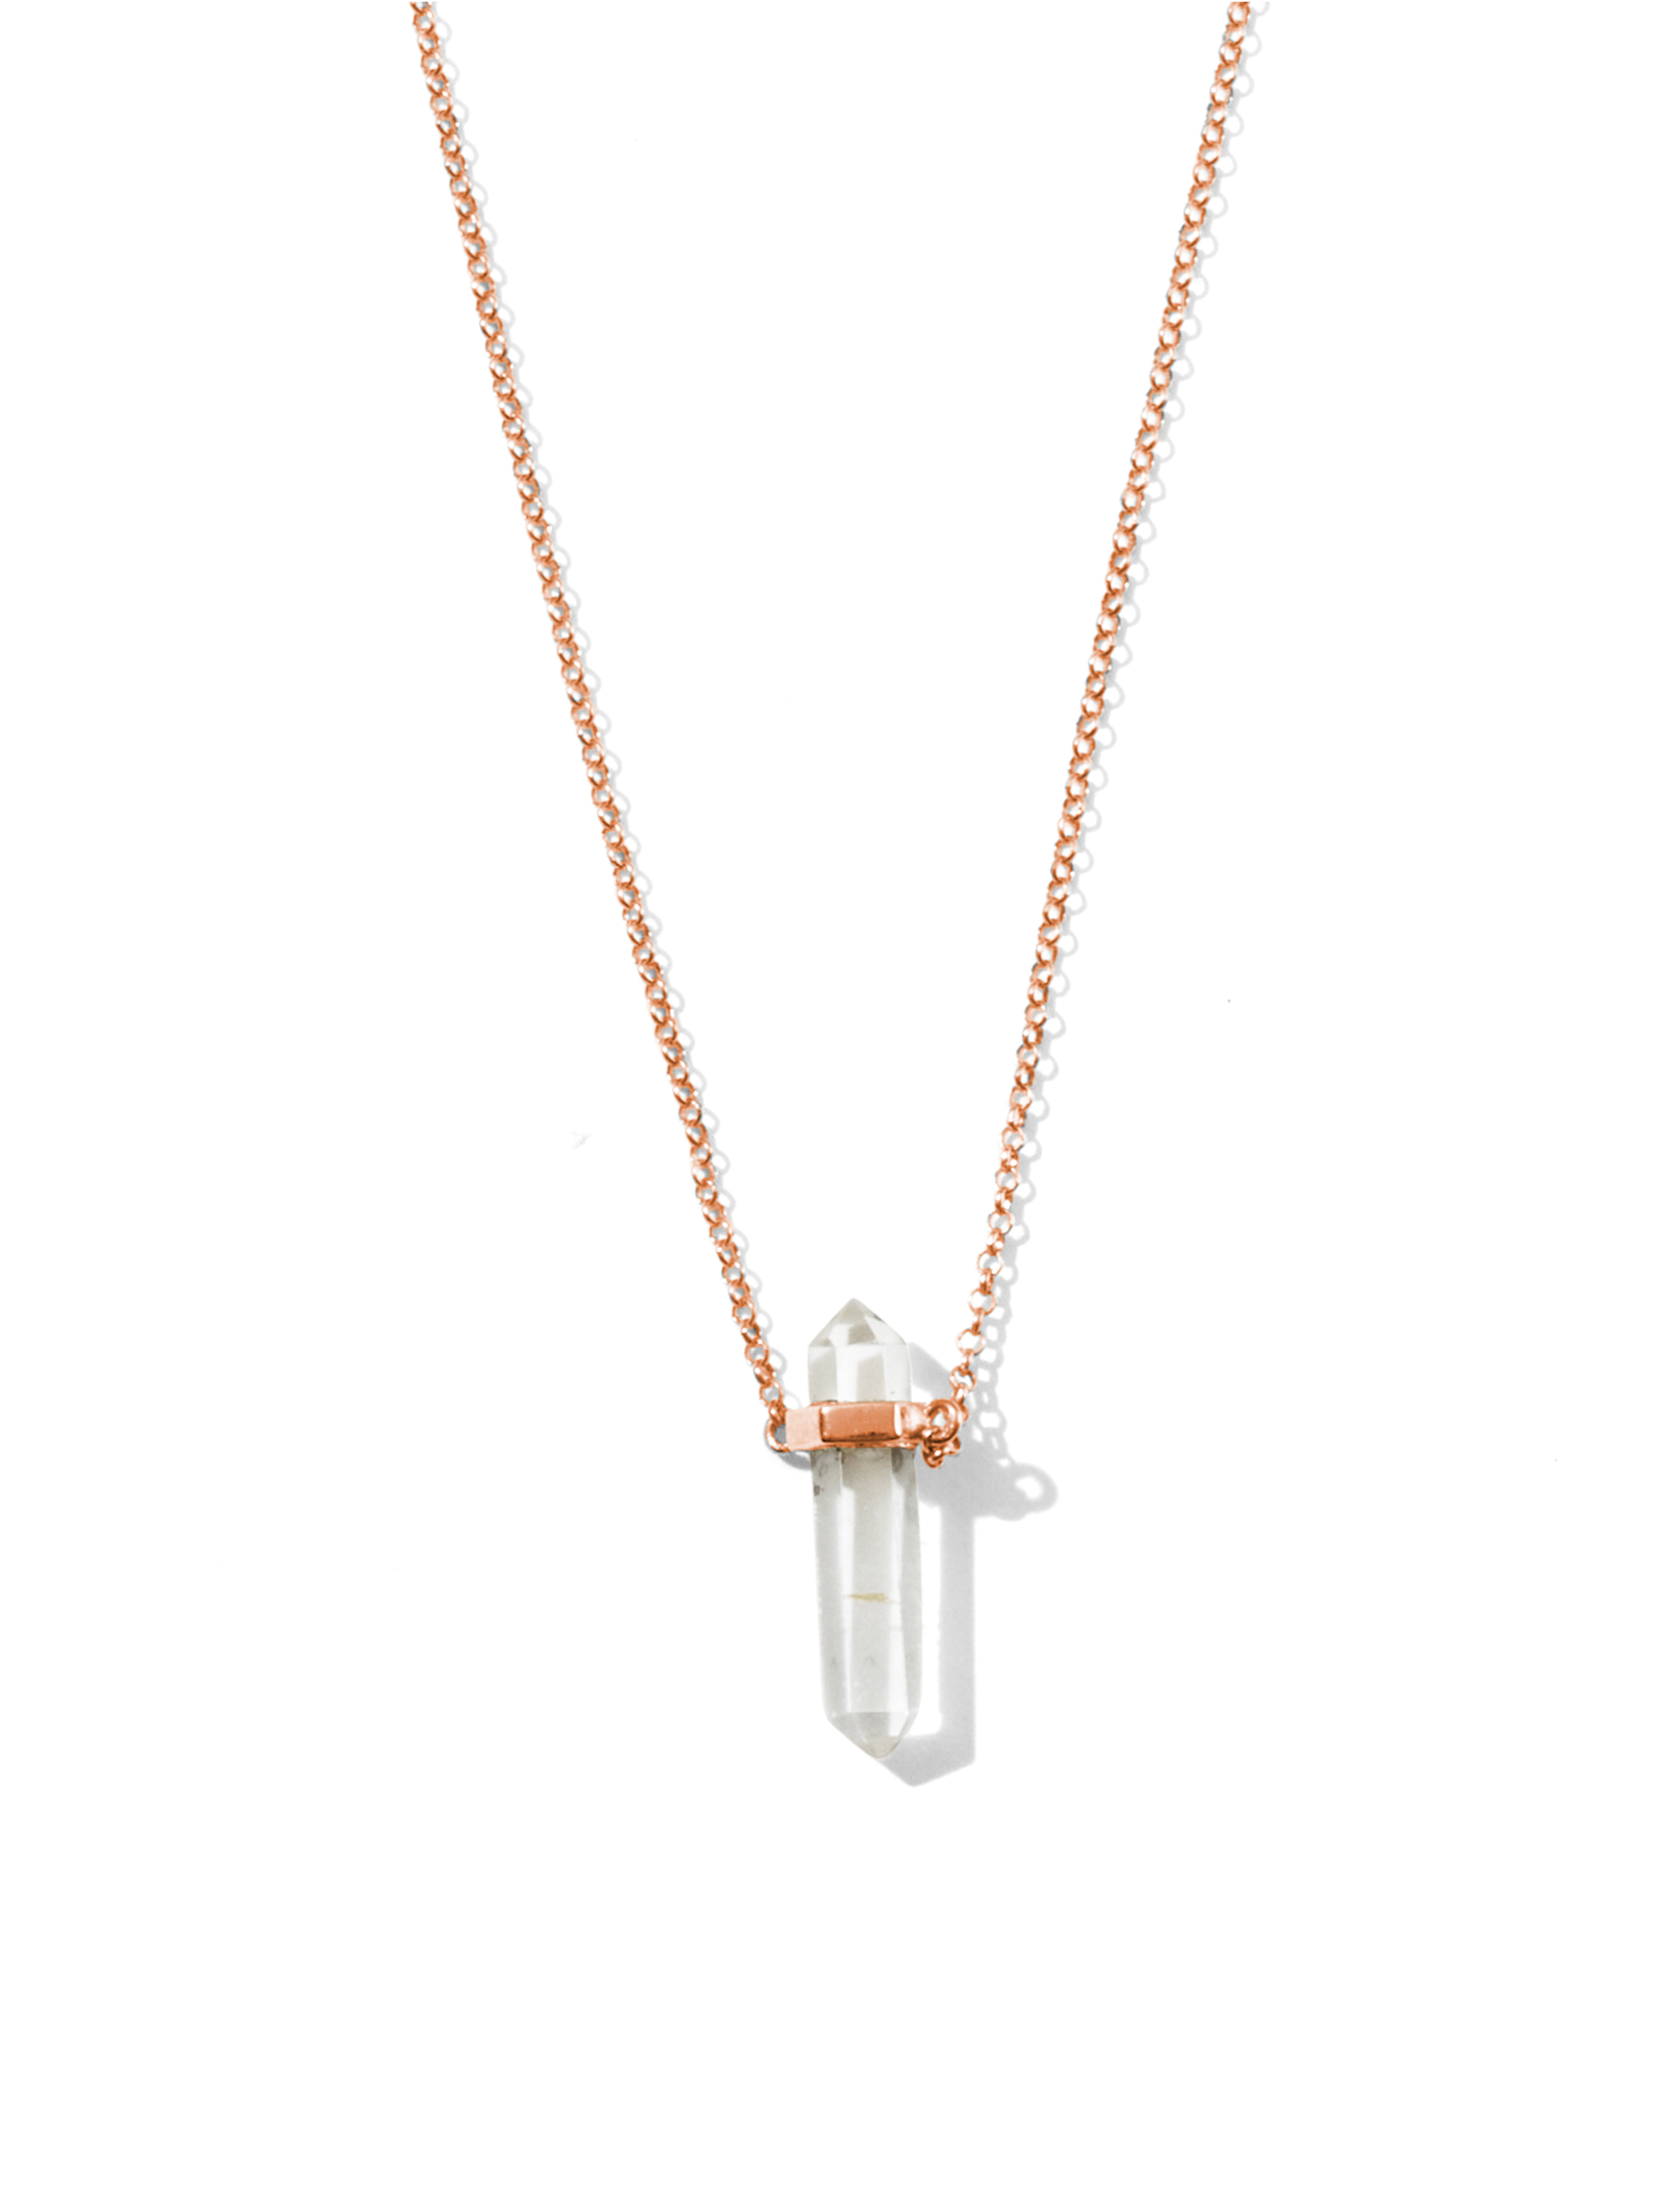 lunar quartz necklace | clear quartz